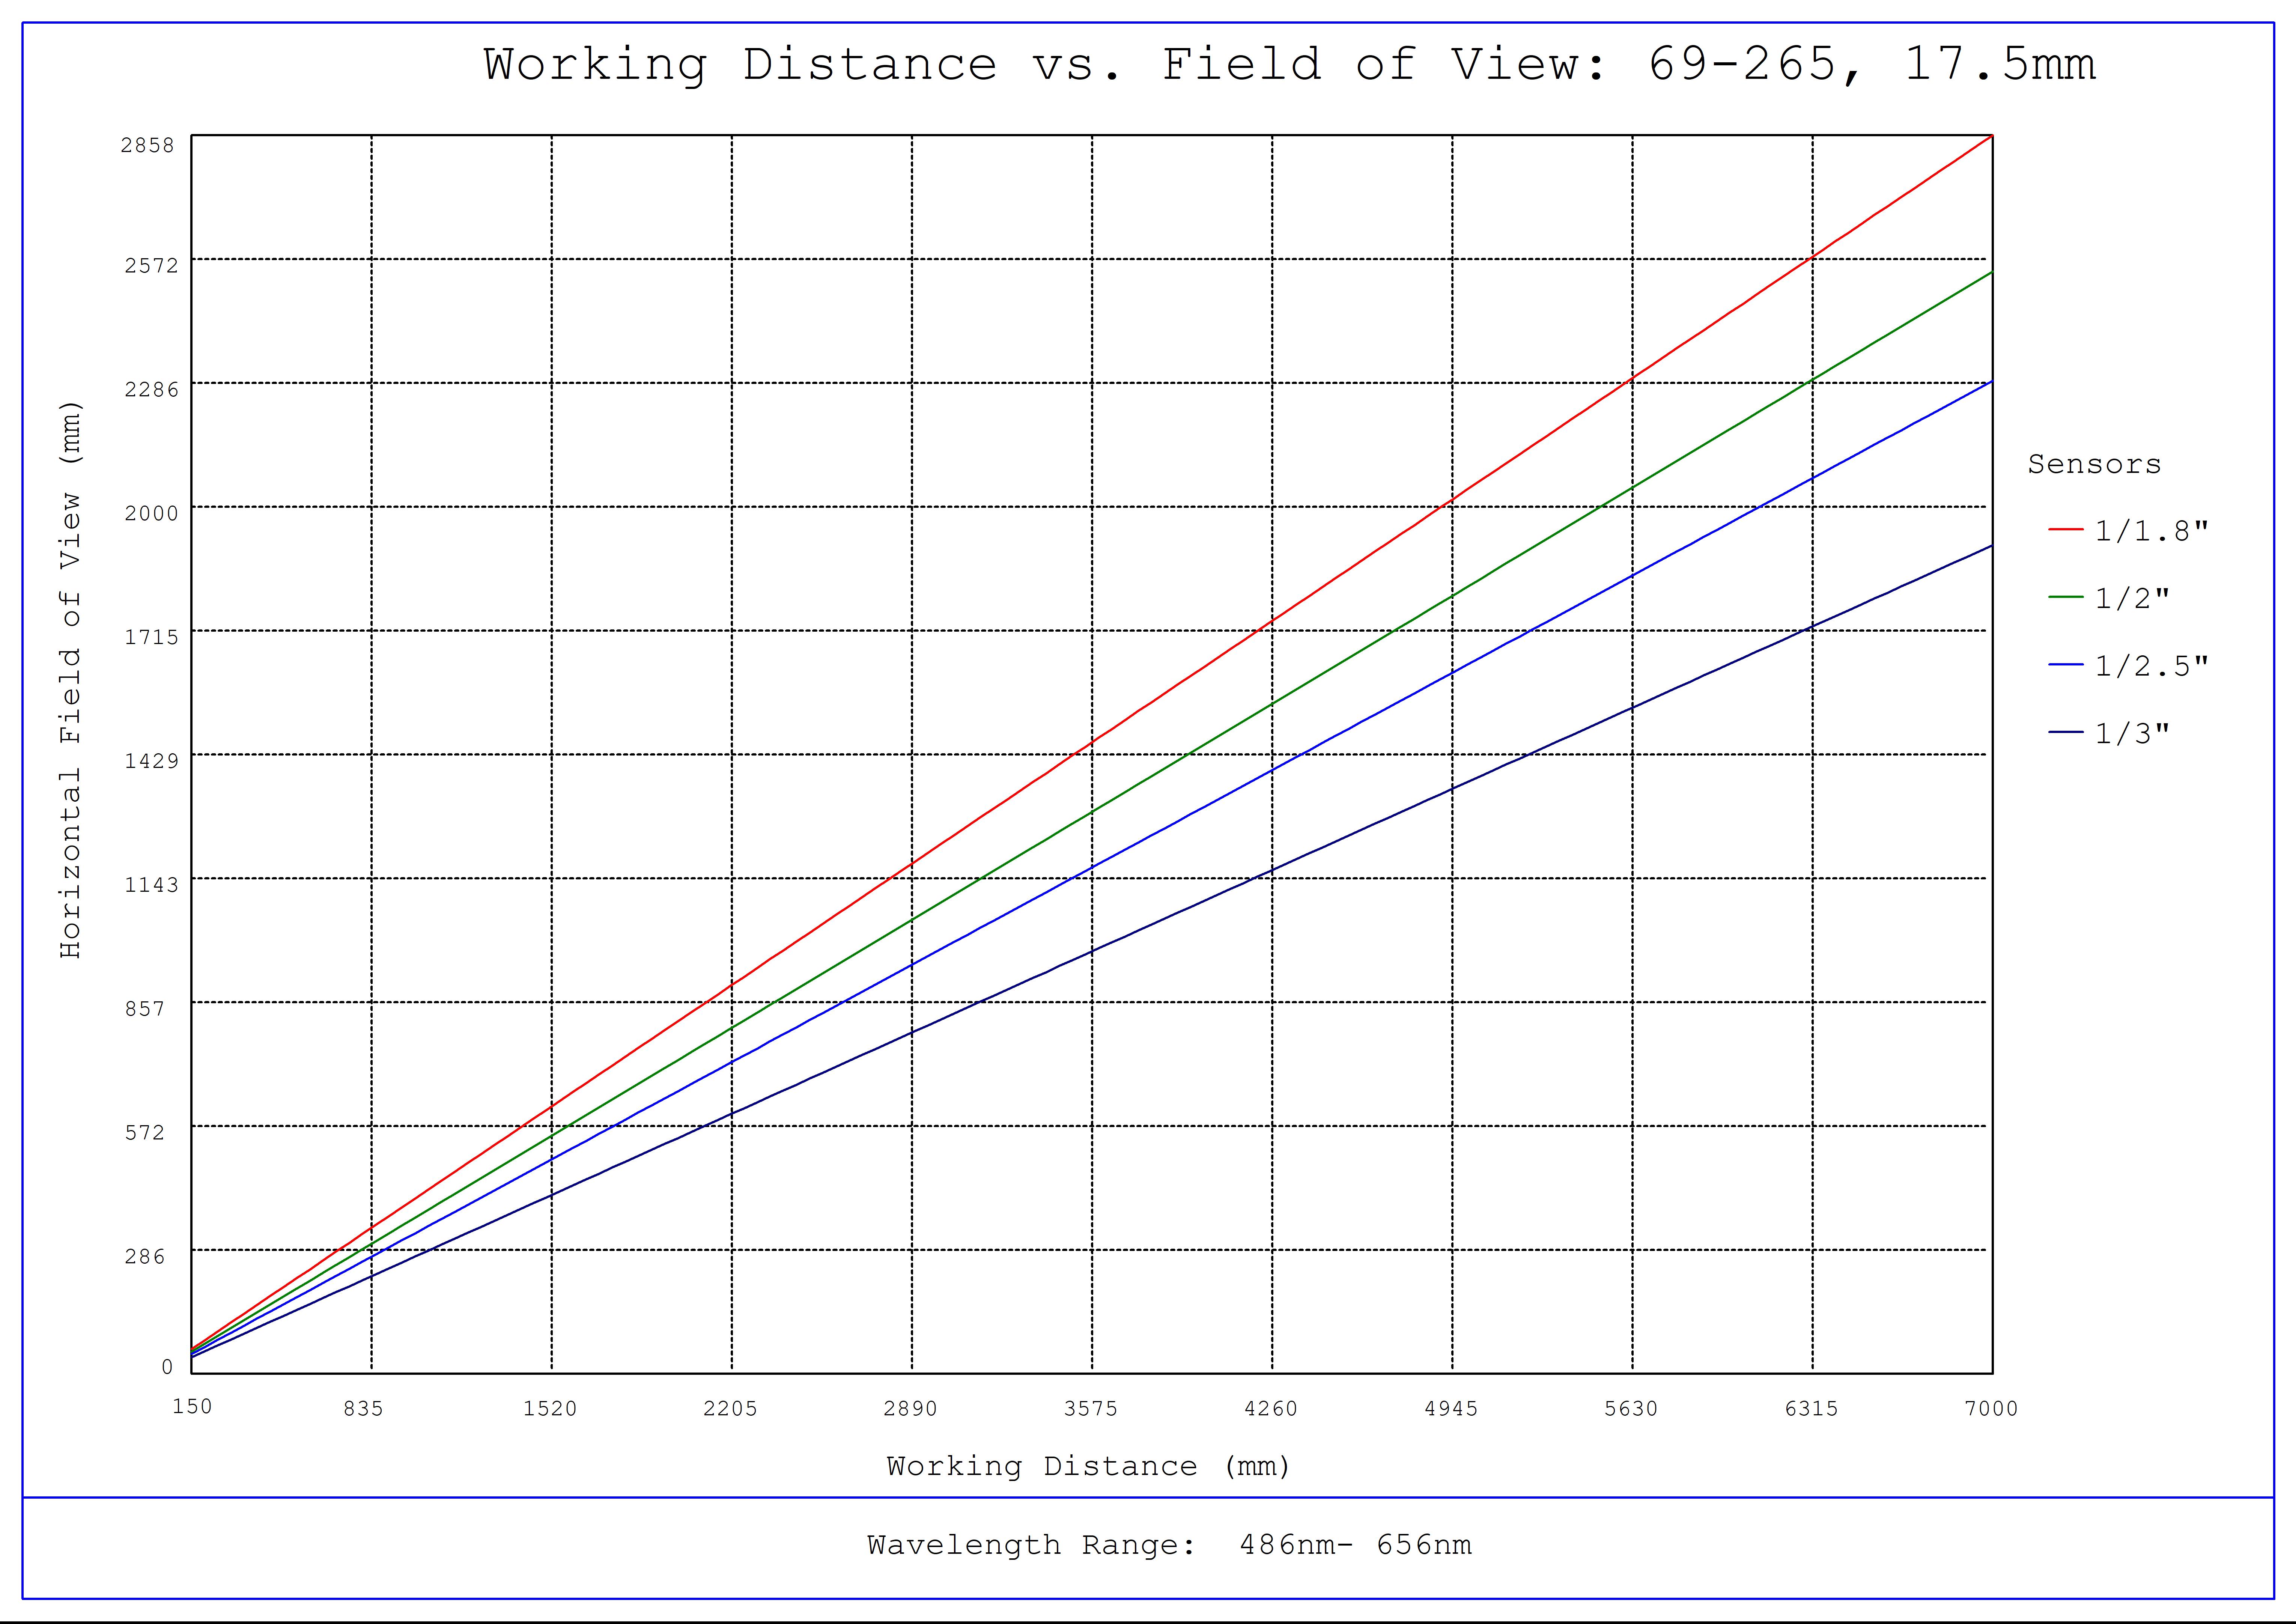 #69-265, 17.5mm FL f/4, Blue Series M12 Lens, Working Distance versus Field of View Plot